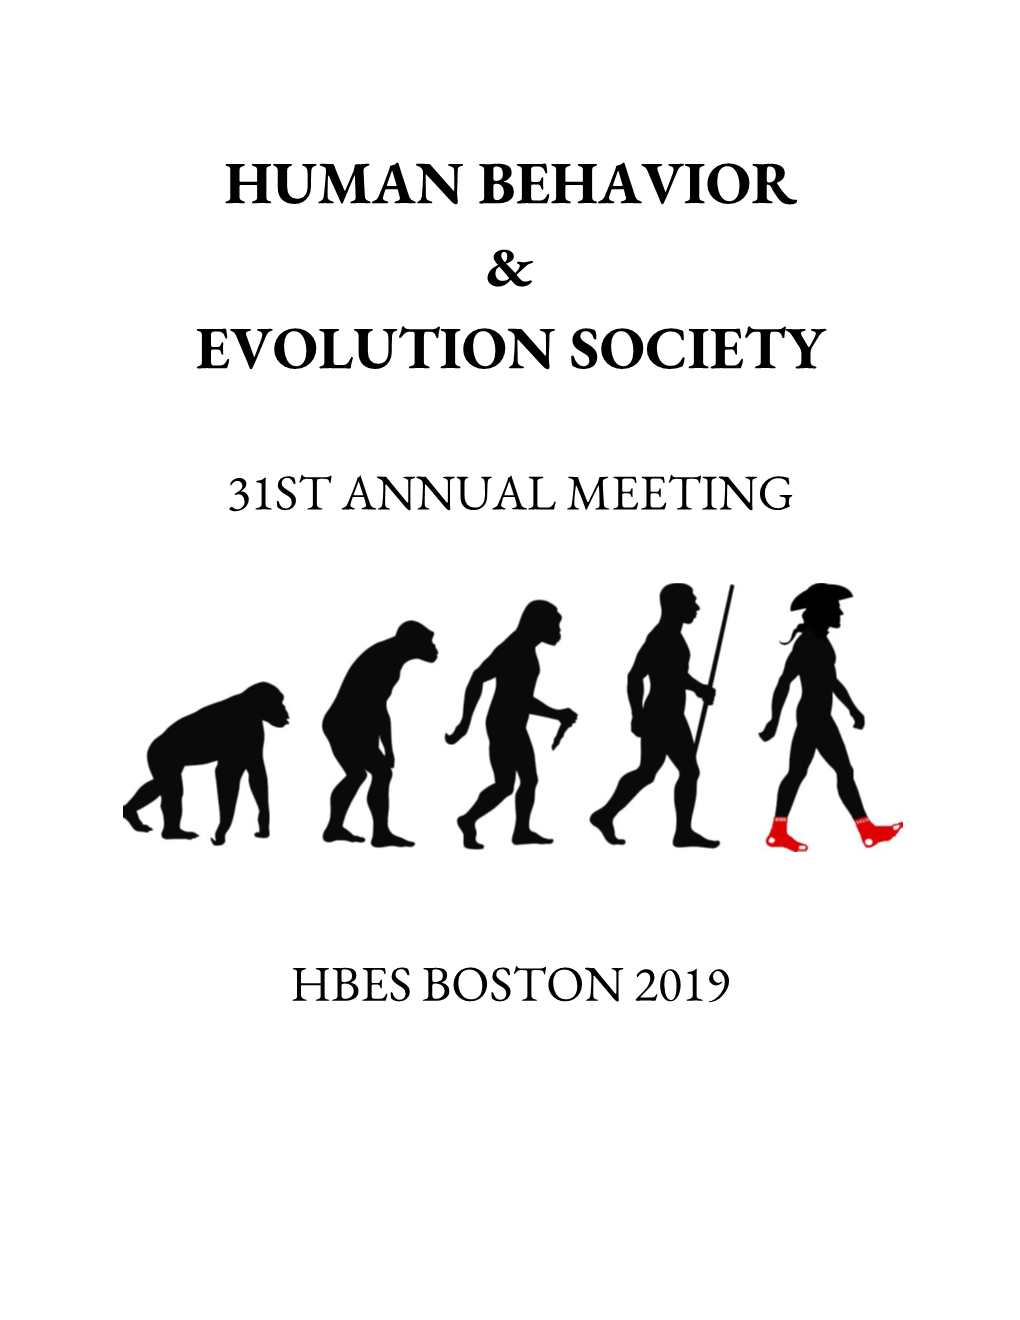 Human Behavior & Evolution Society